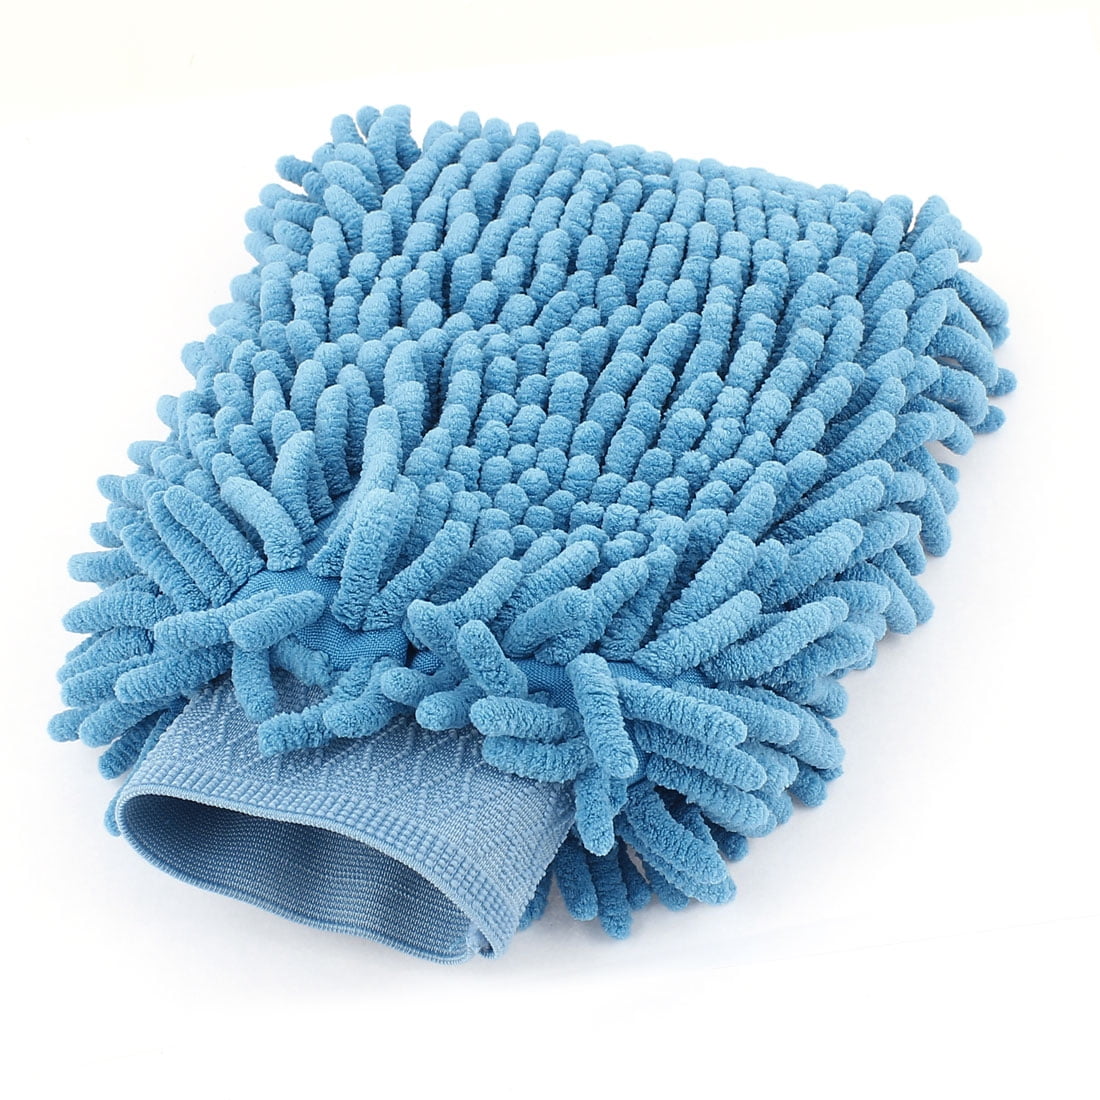 Auto Drive Large Microfiber Car Drying Towel 6SQFT, Super Absorbent, Blue